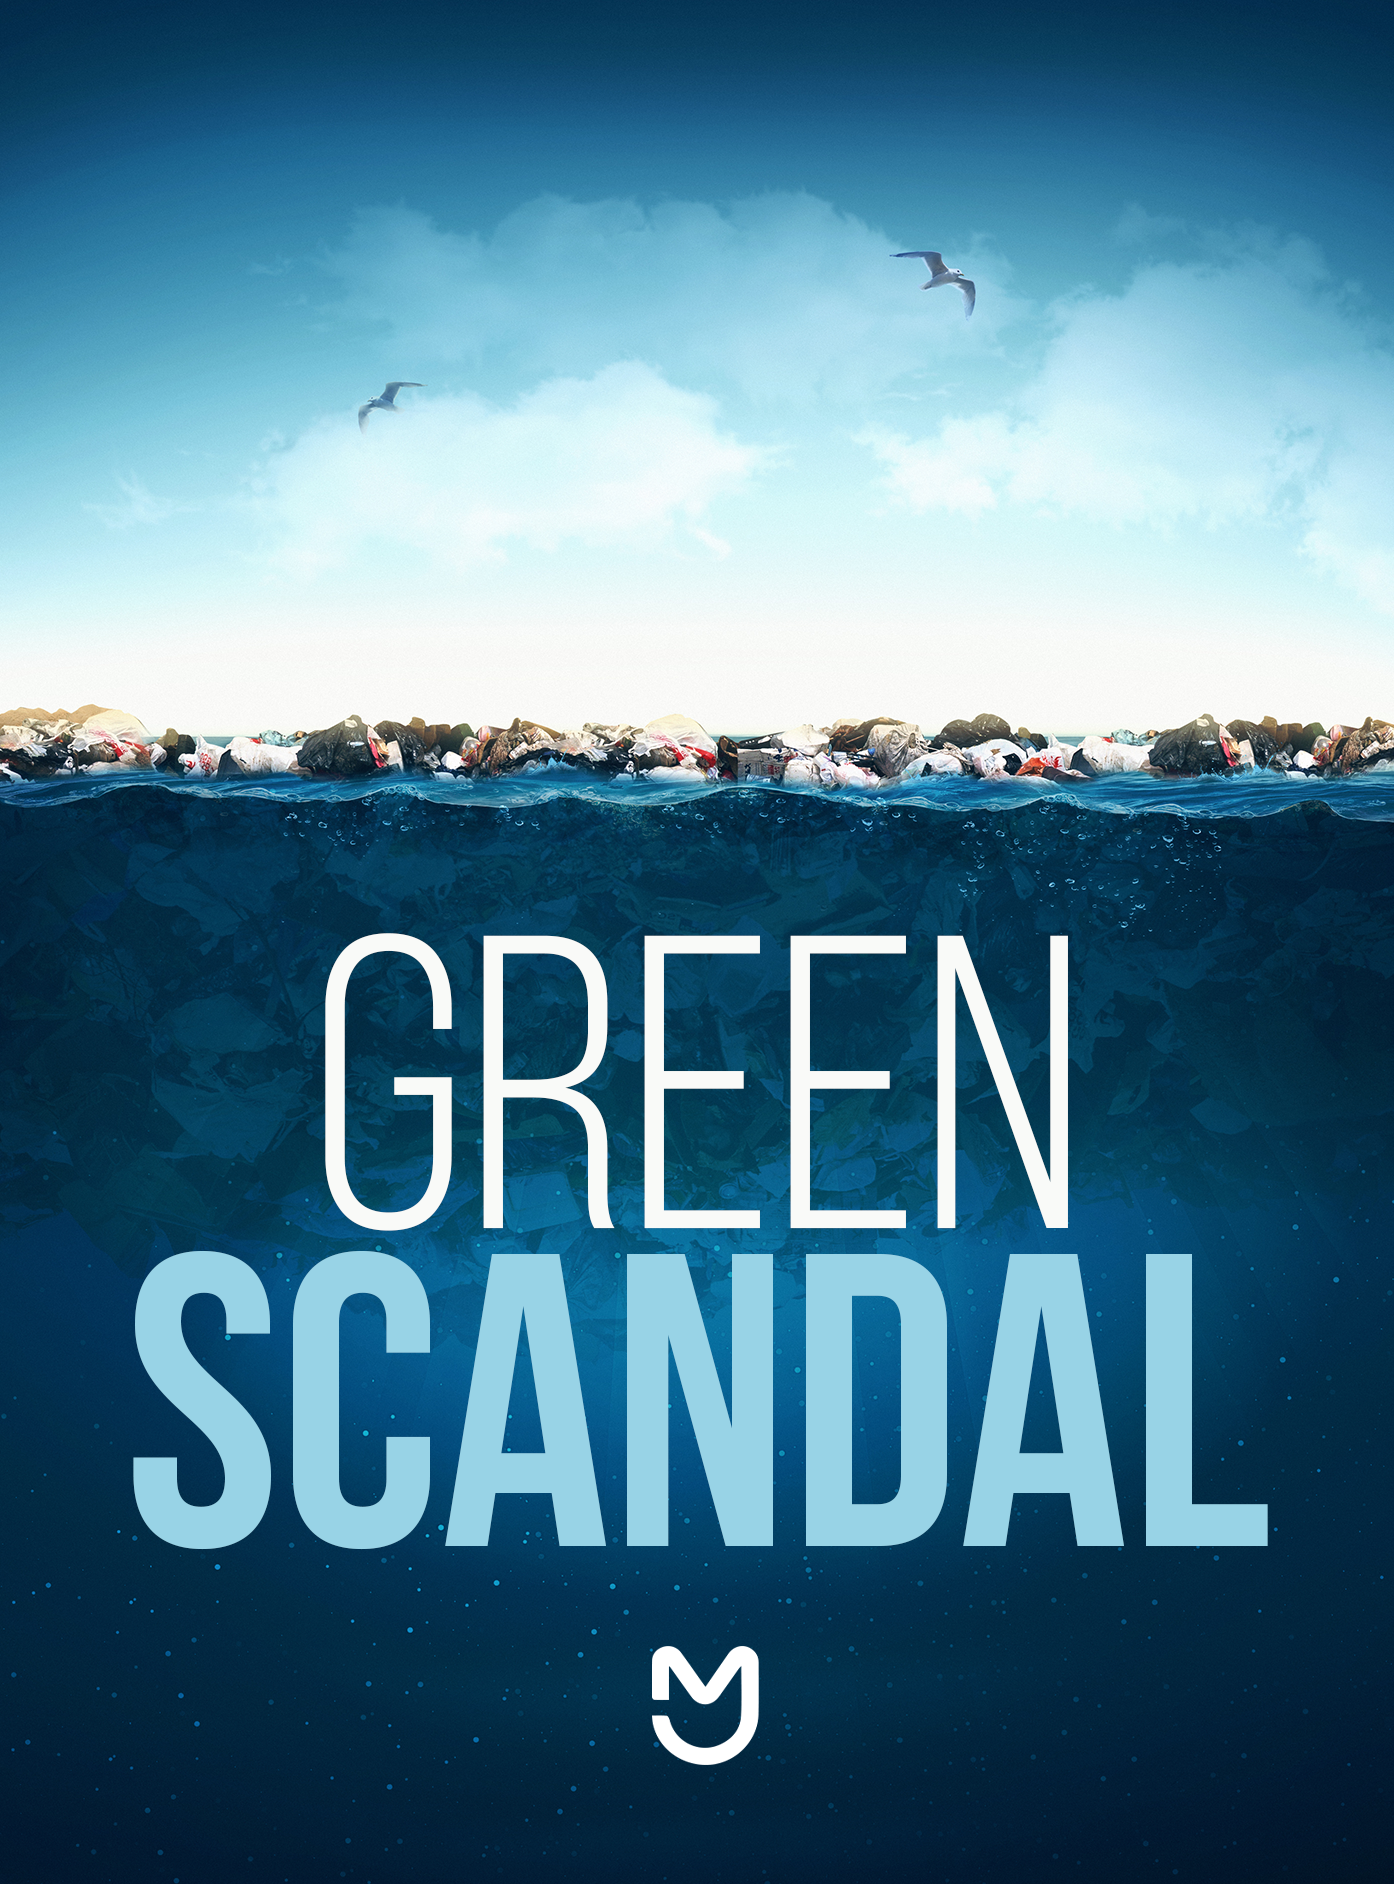 Green scandal